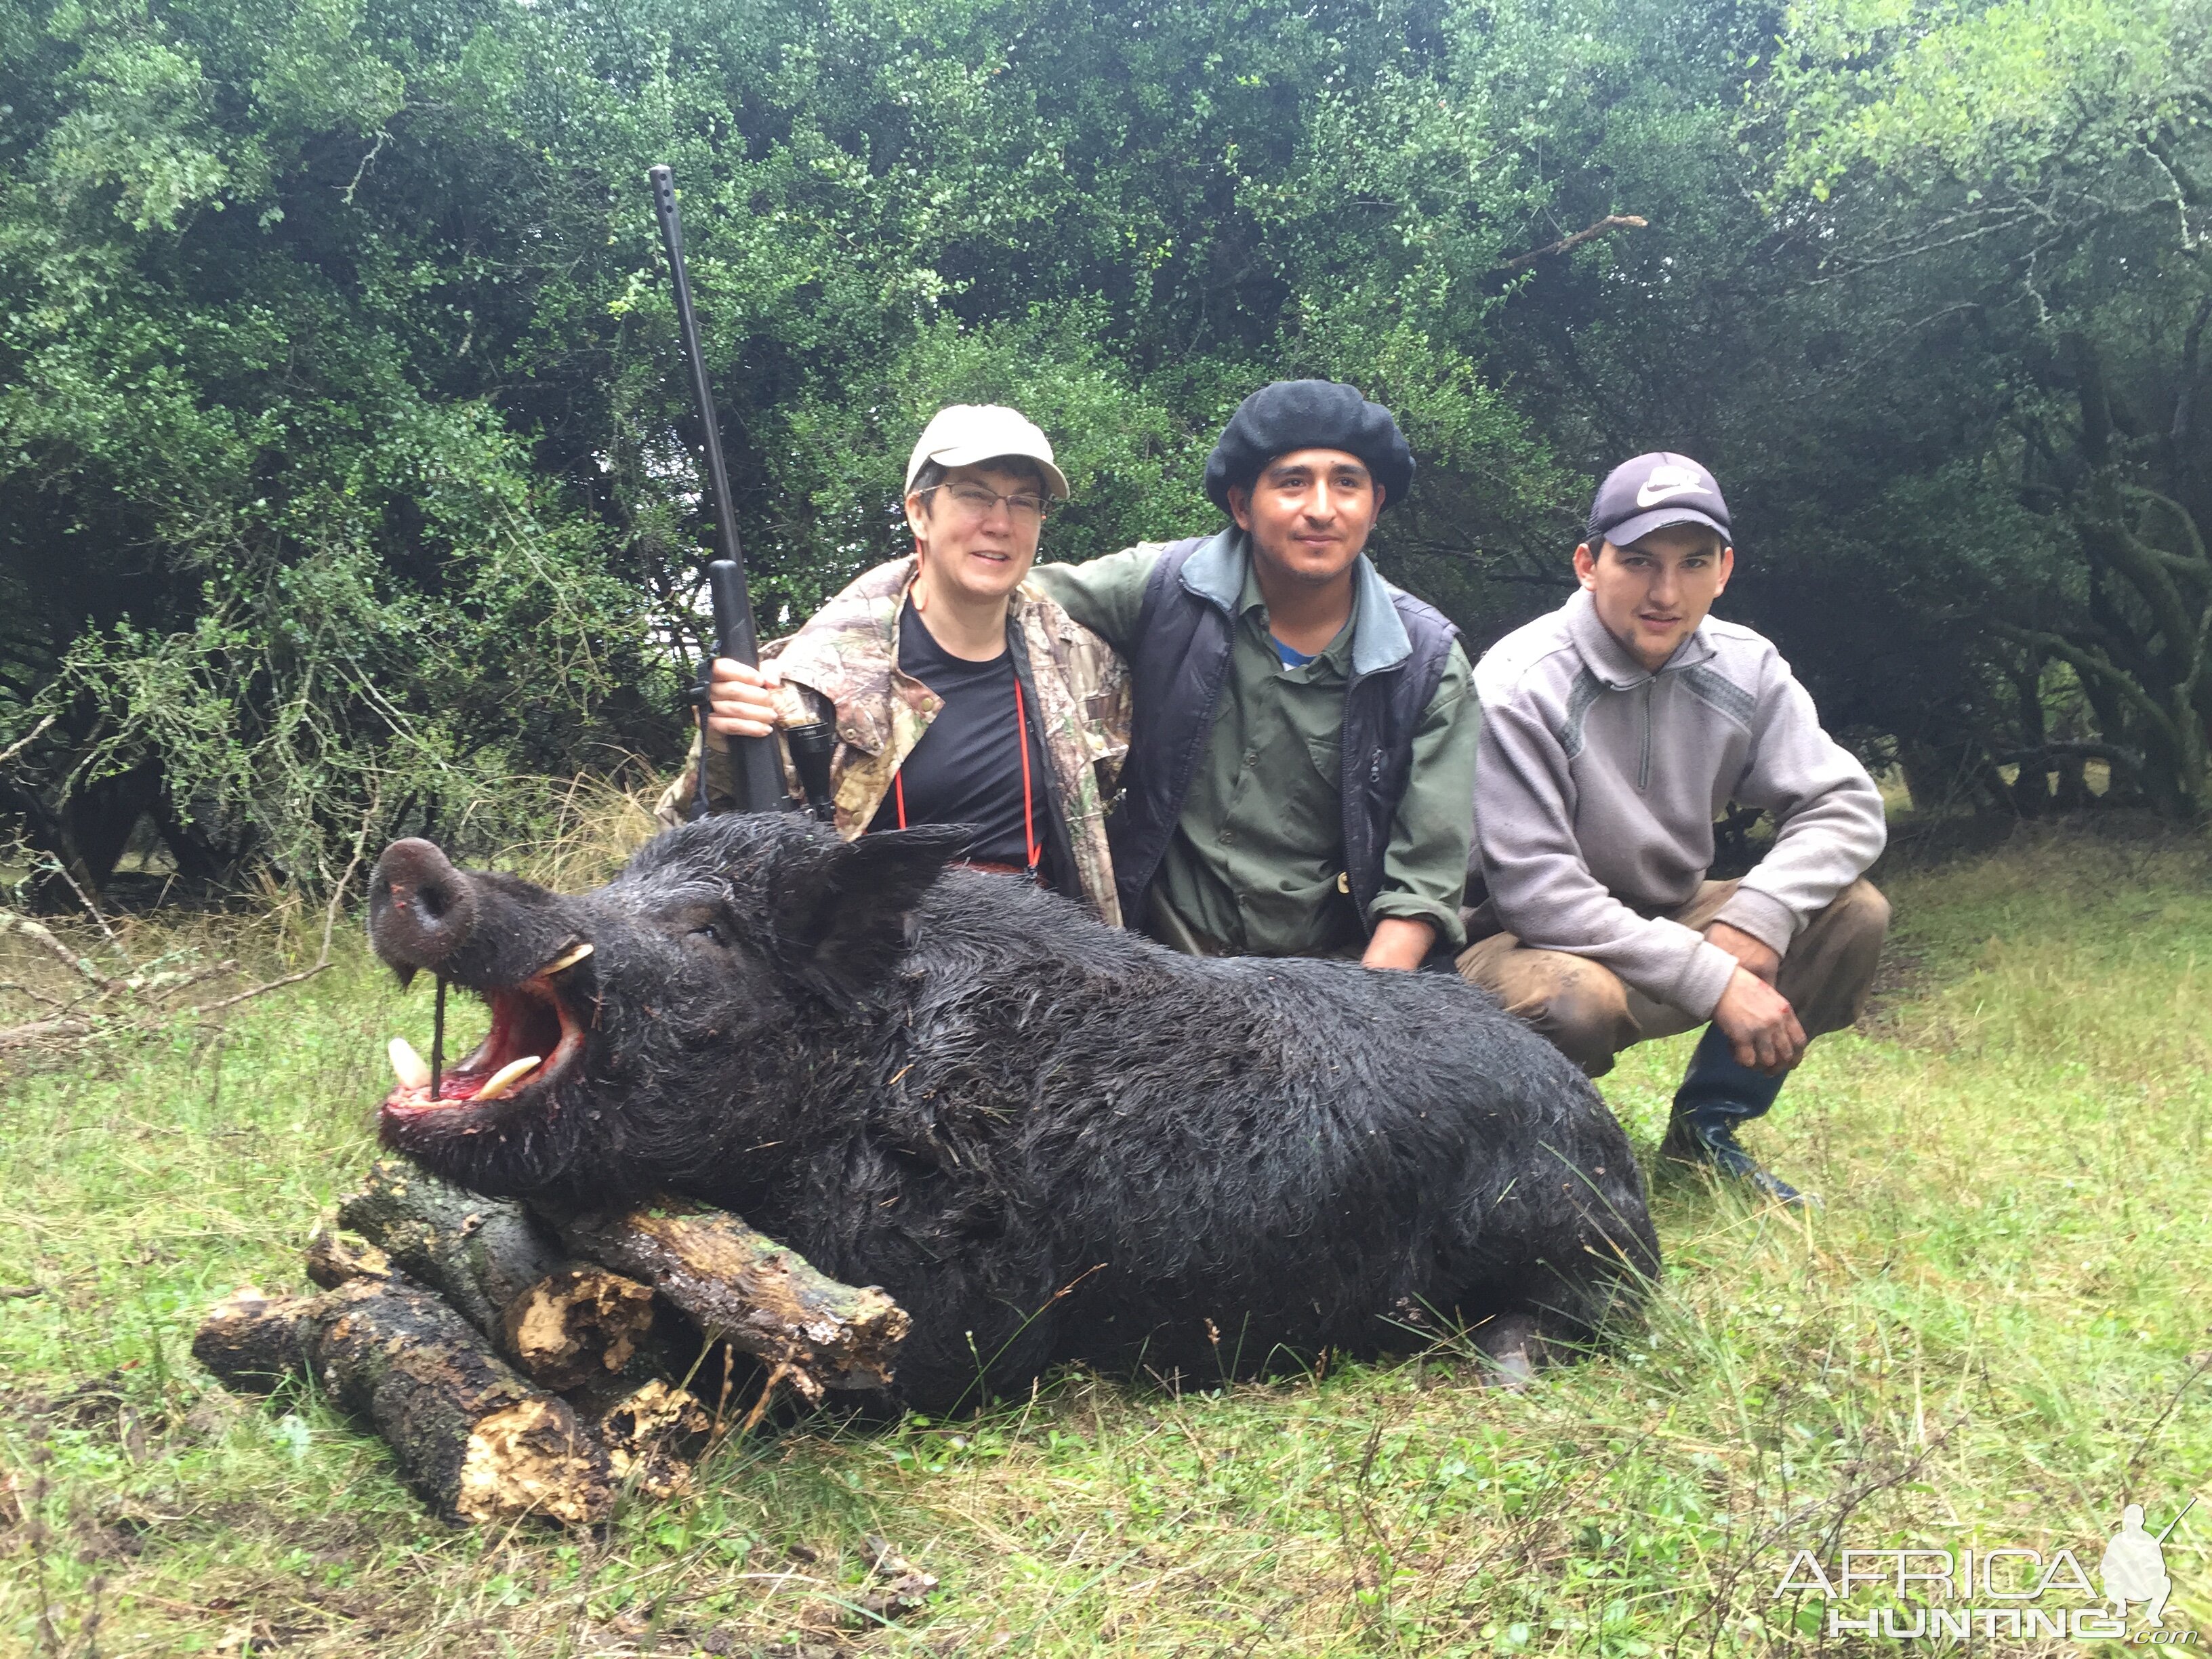 Wild Boar Hunt Argentina